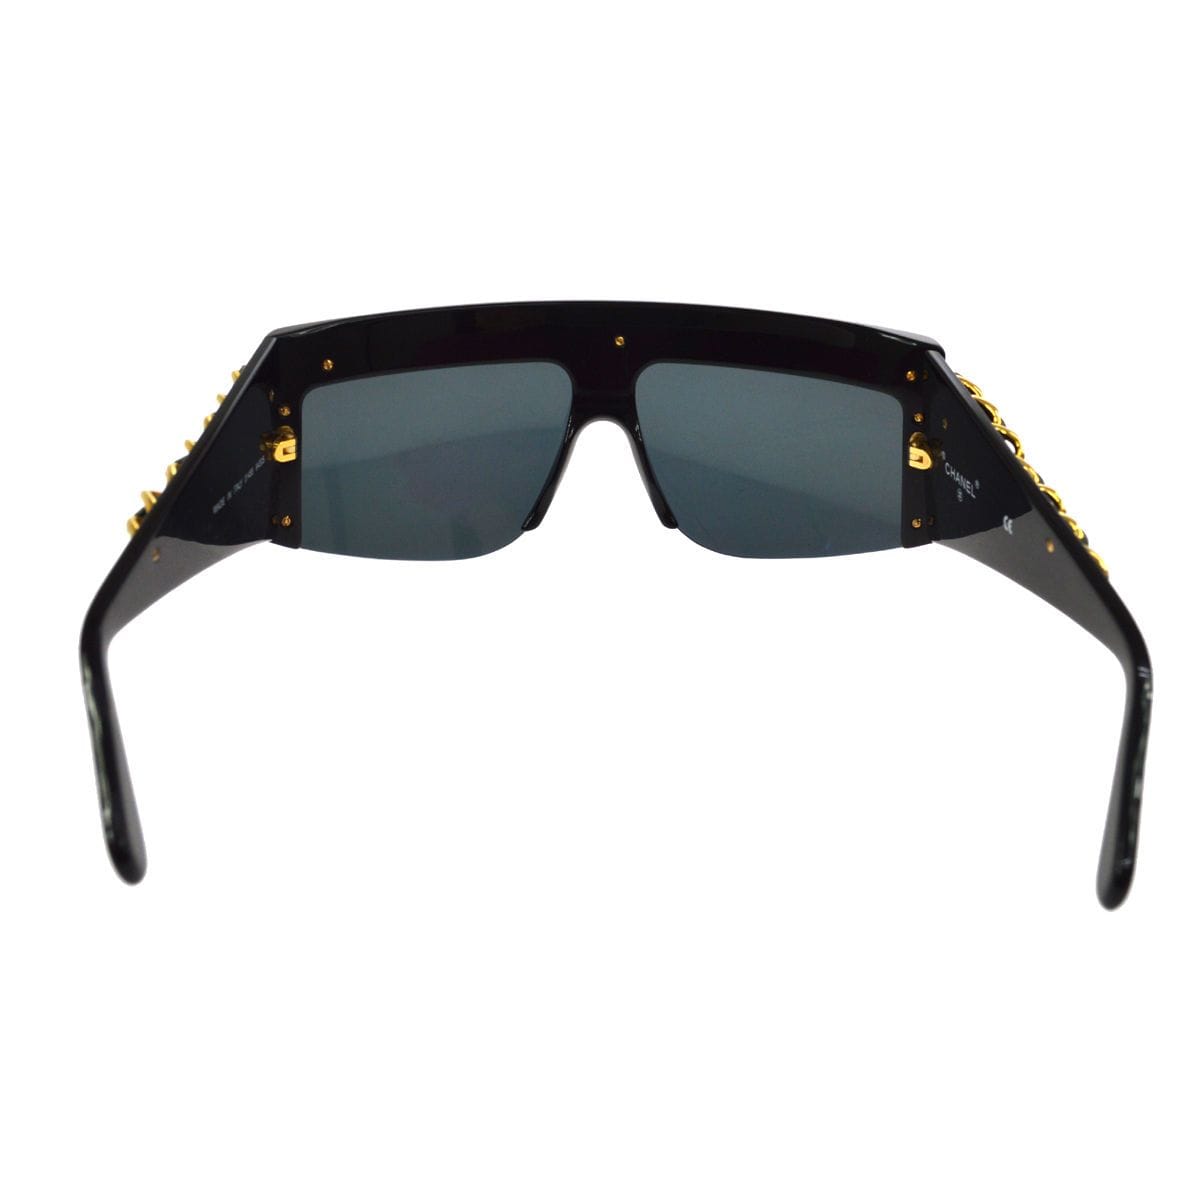 ULTRA RARE! CHANEL CC Chain Sunglasses Black Eyewear 01455 94305 86755